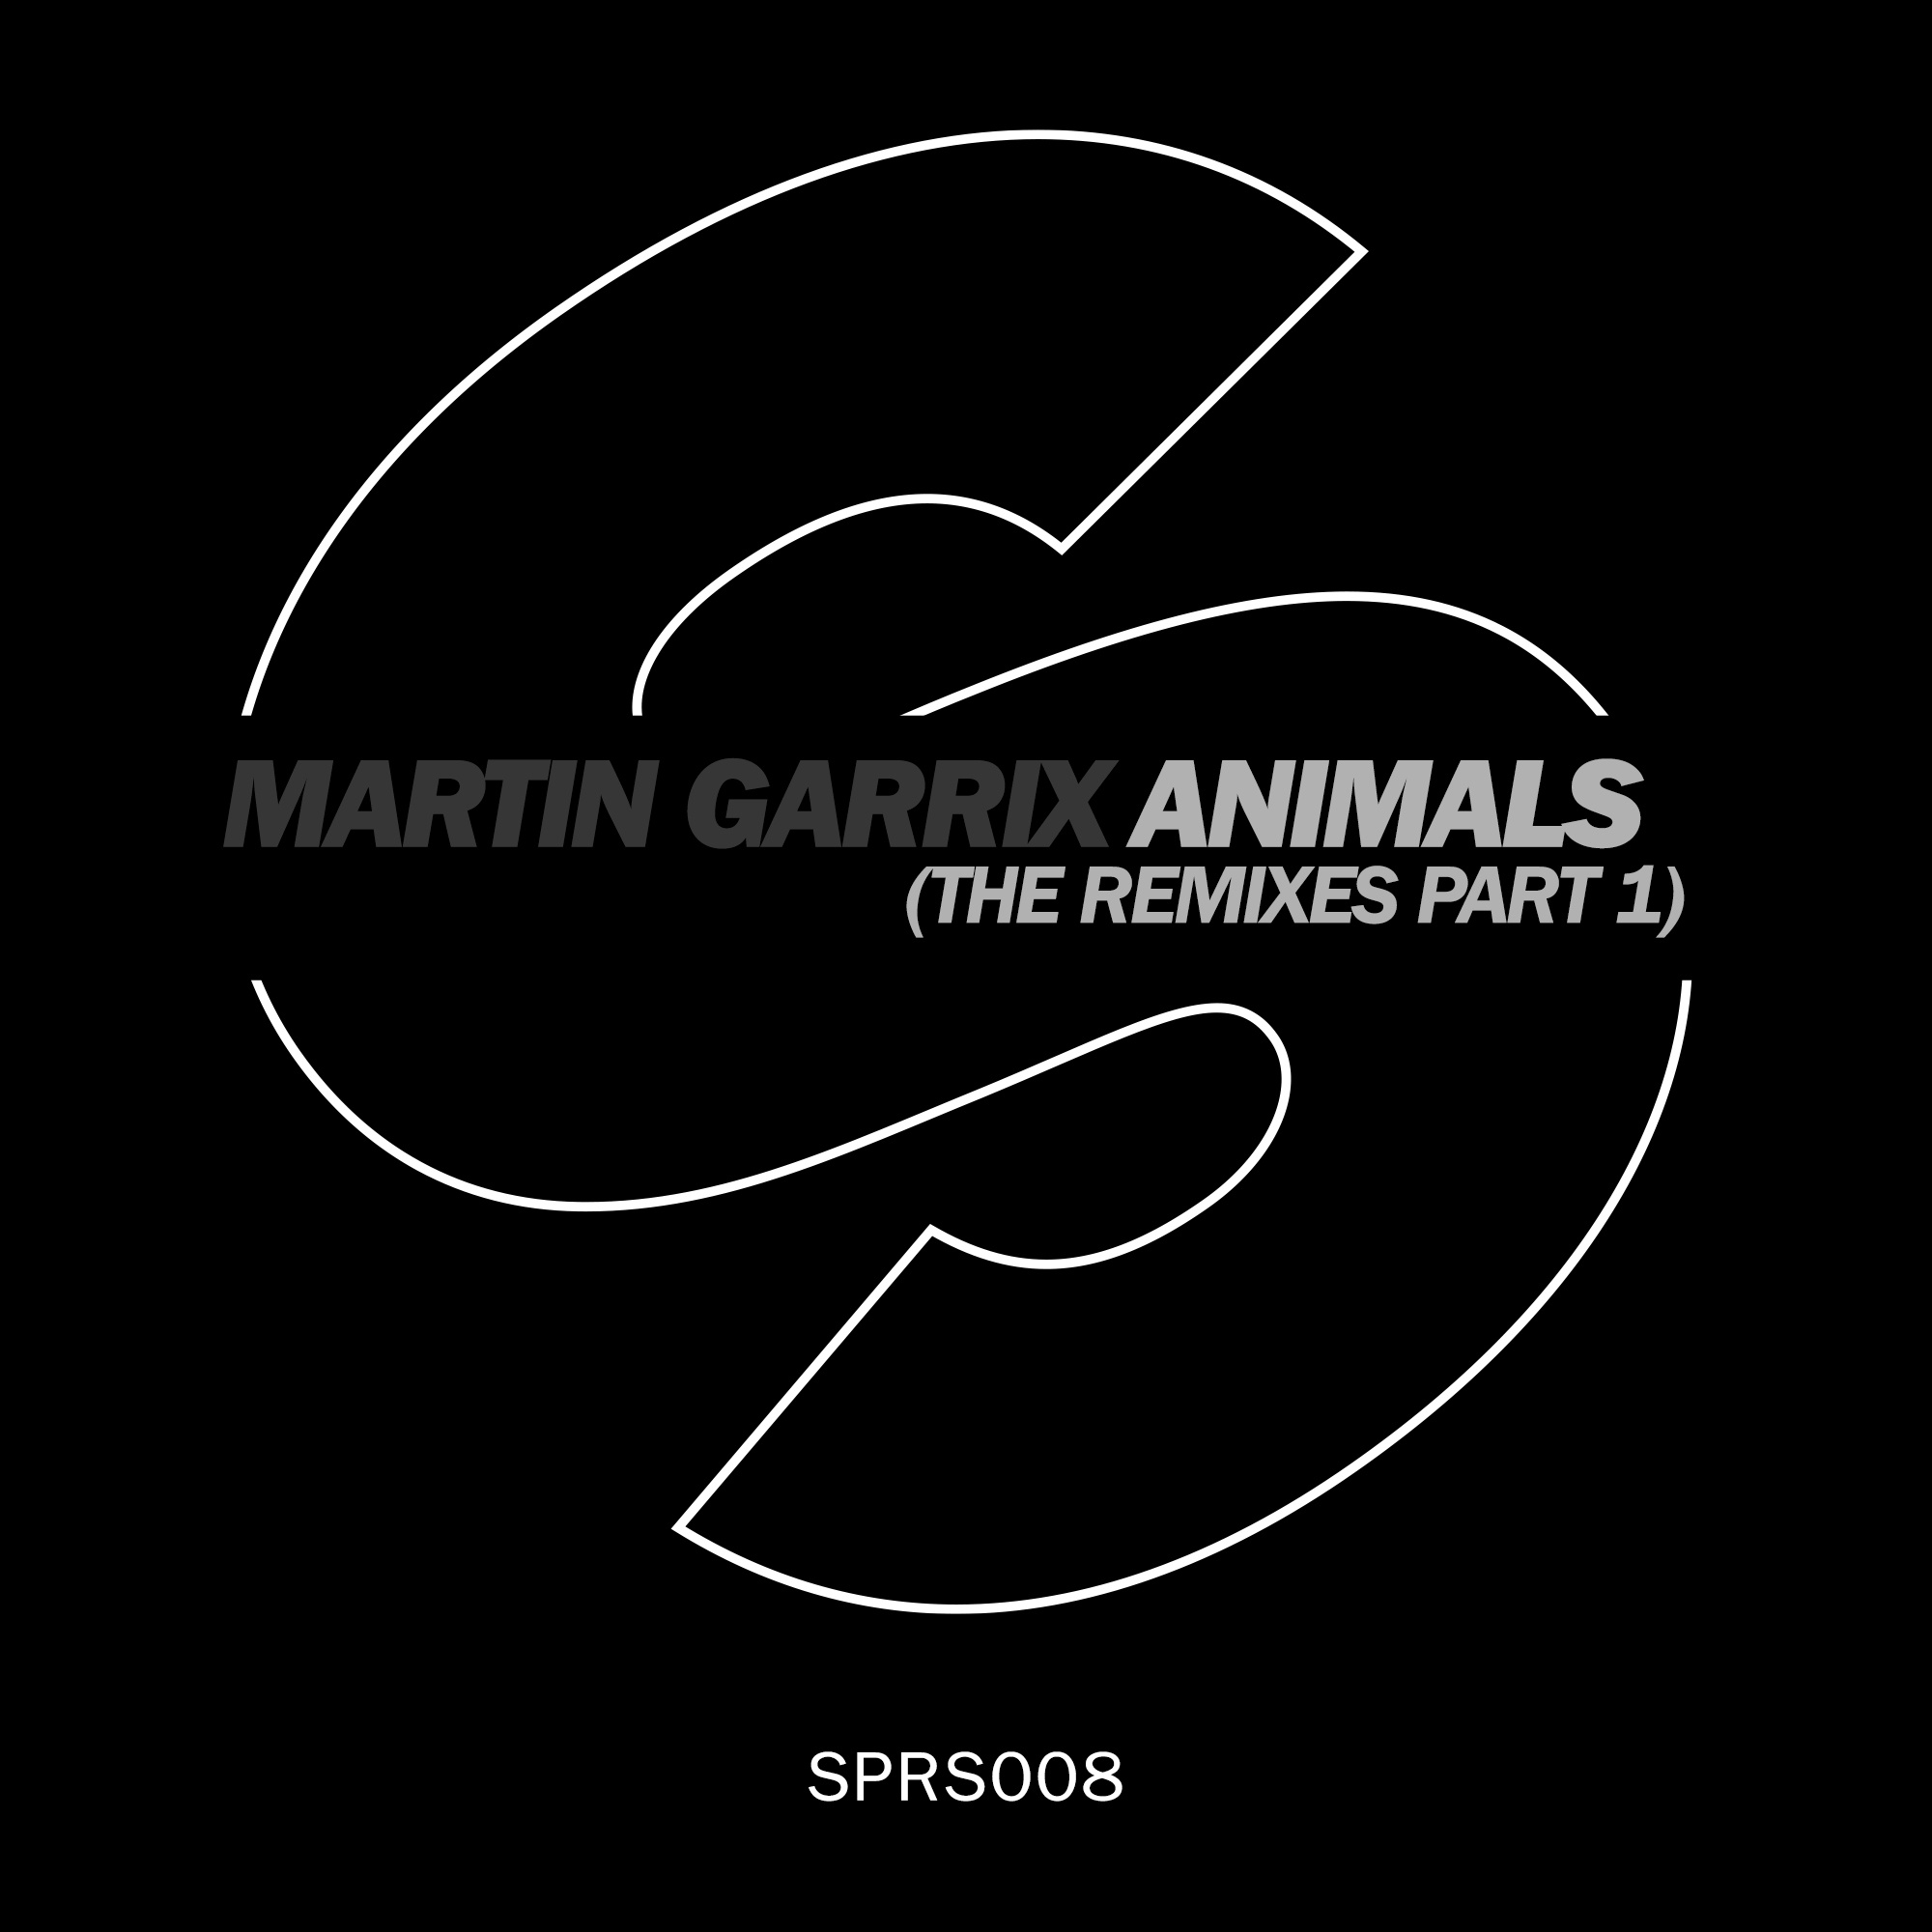 Animals (The Remixes Part 1)